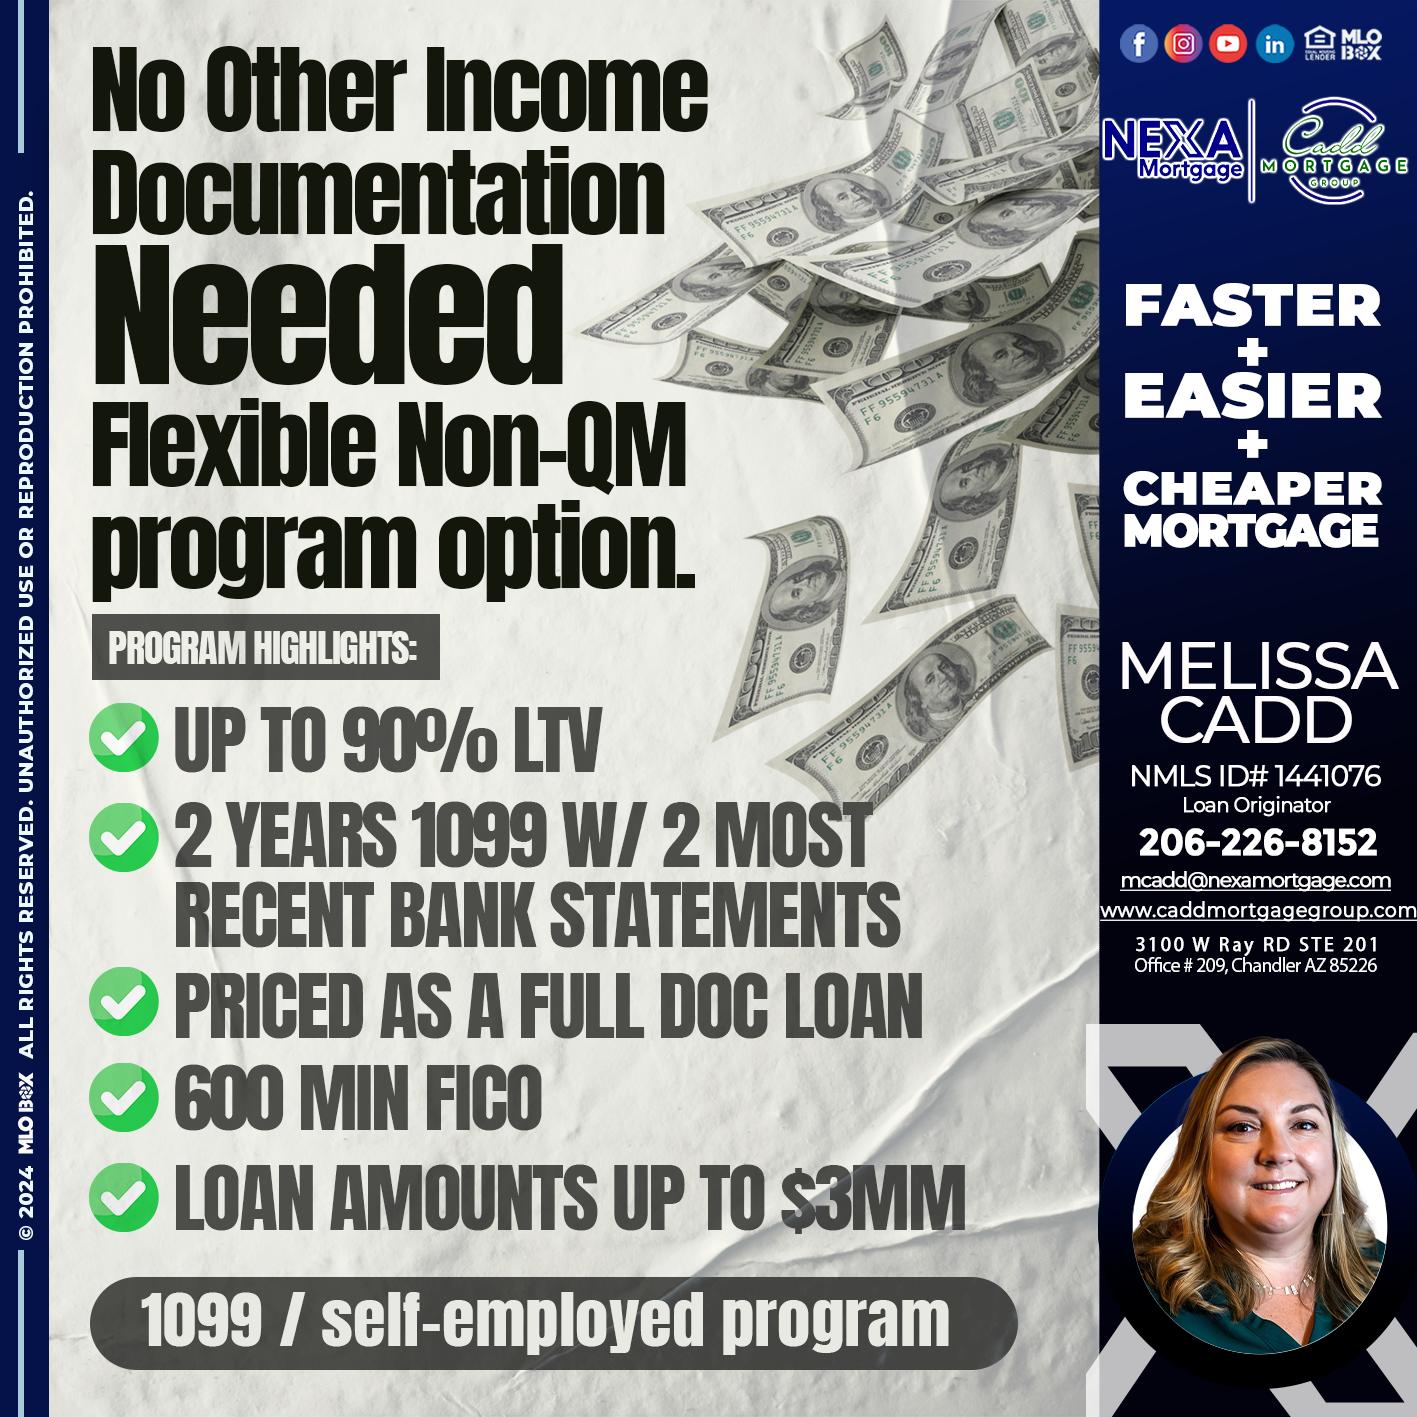 Your MLOBOX banner - Forward Lending - Melissa Cadd -Loan Originator